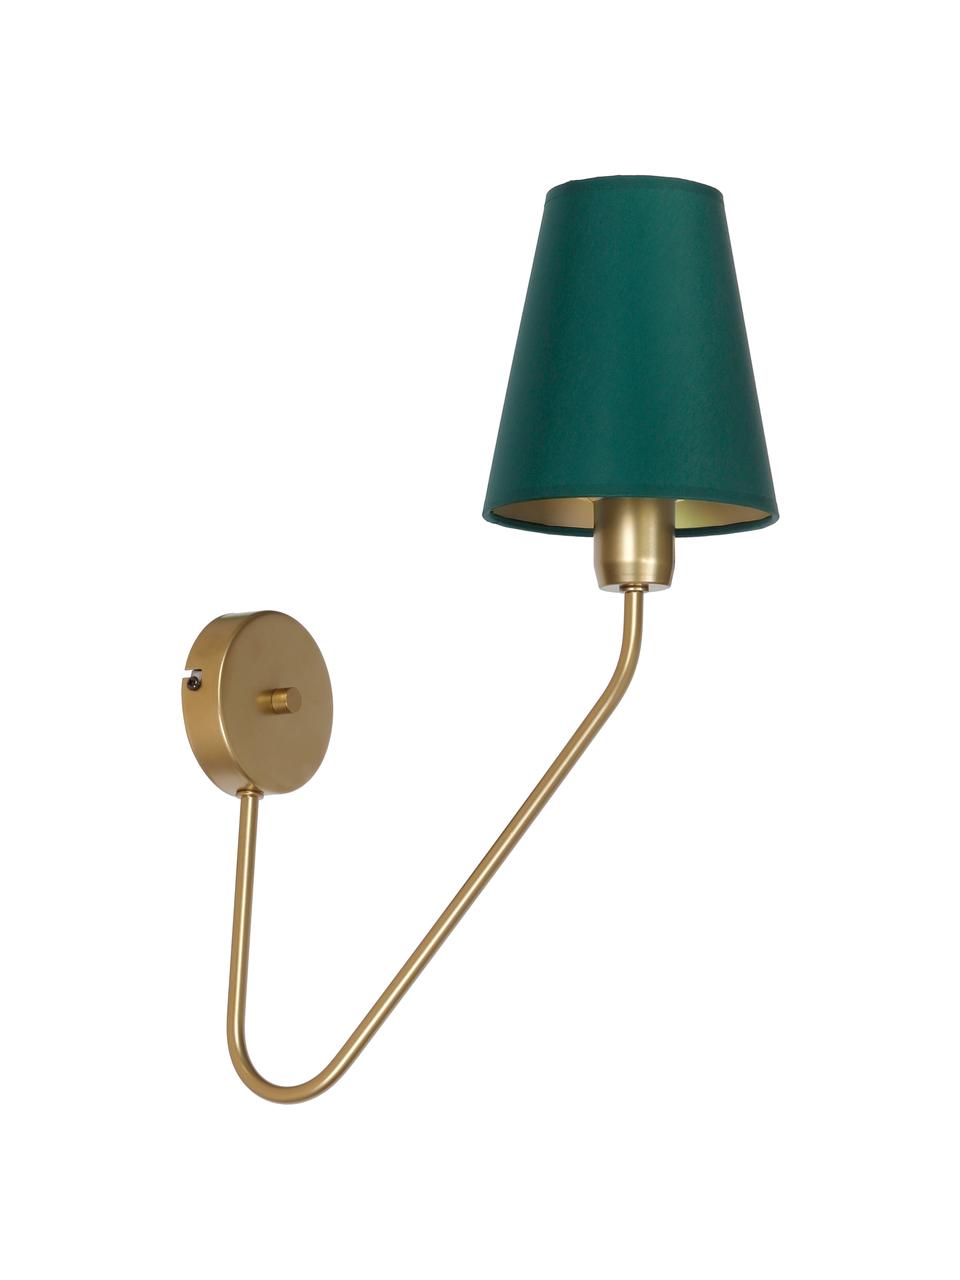 Grote wandlamp Victoria-goudkleurig, Lampenkap: katoenmix, Groen, goudkleurig, D 34 x H 50 cm